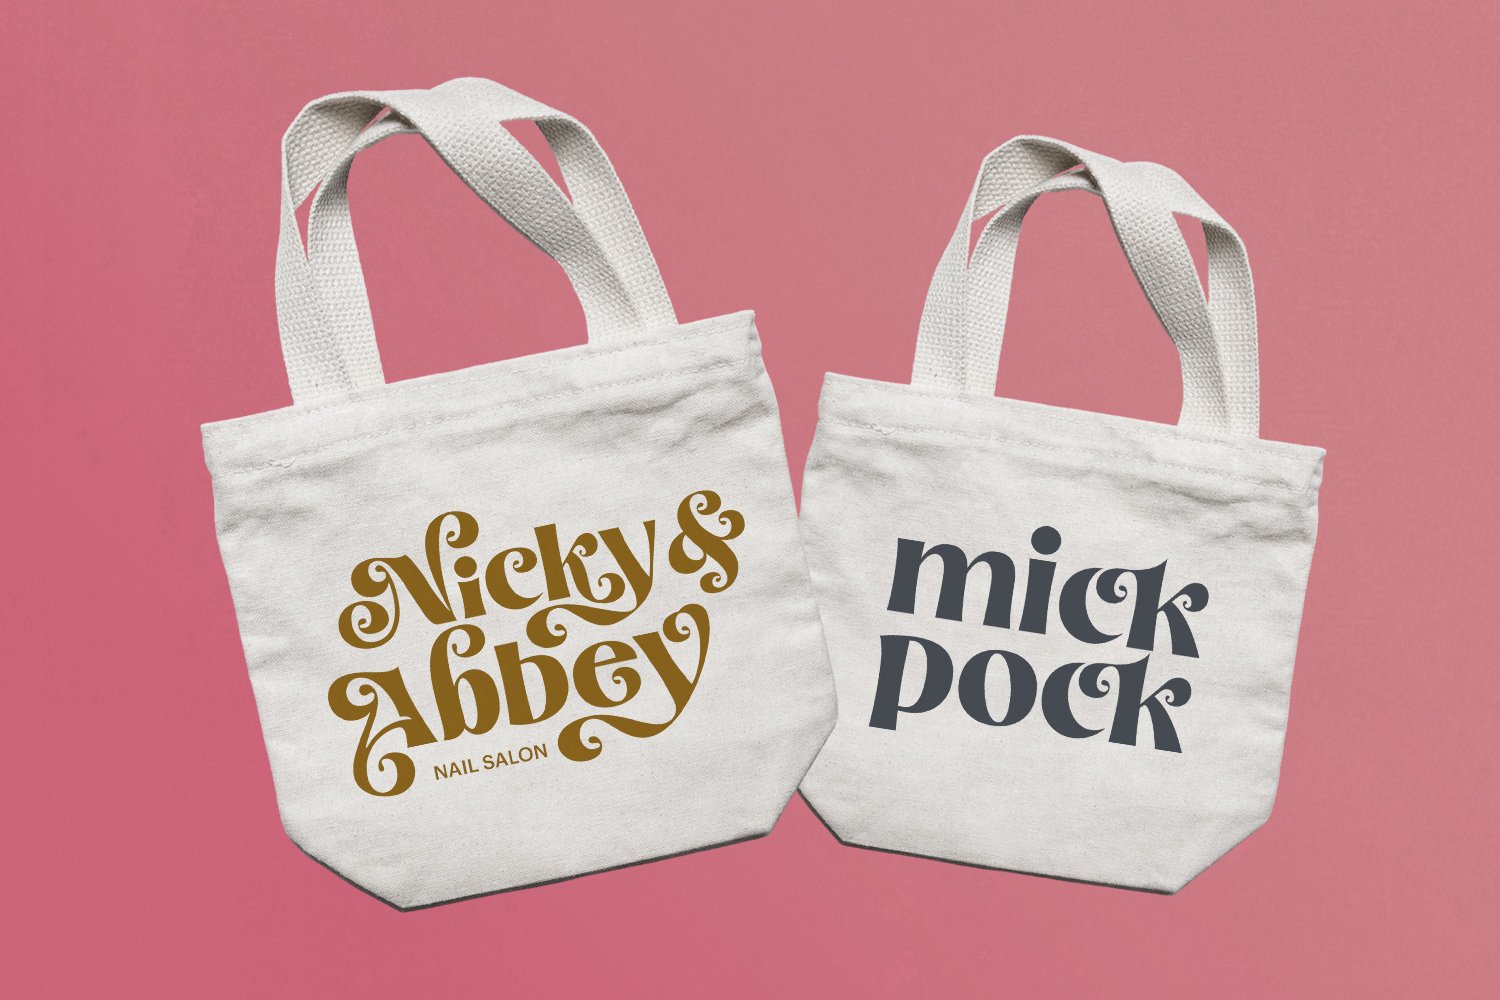 nicky abbey mick pock tote bag design 150